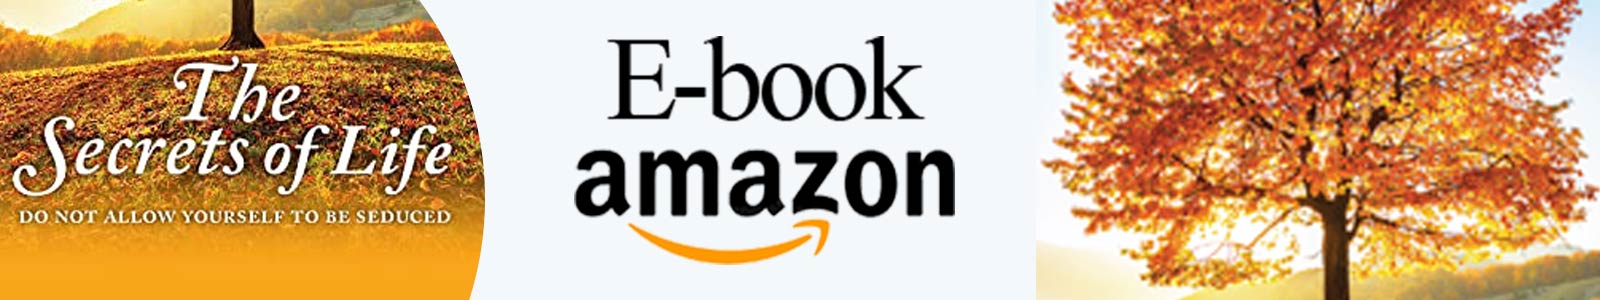 Buy the e-book on Amazon